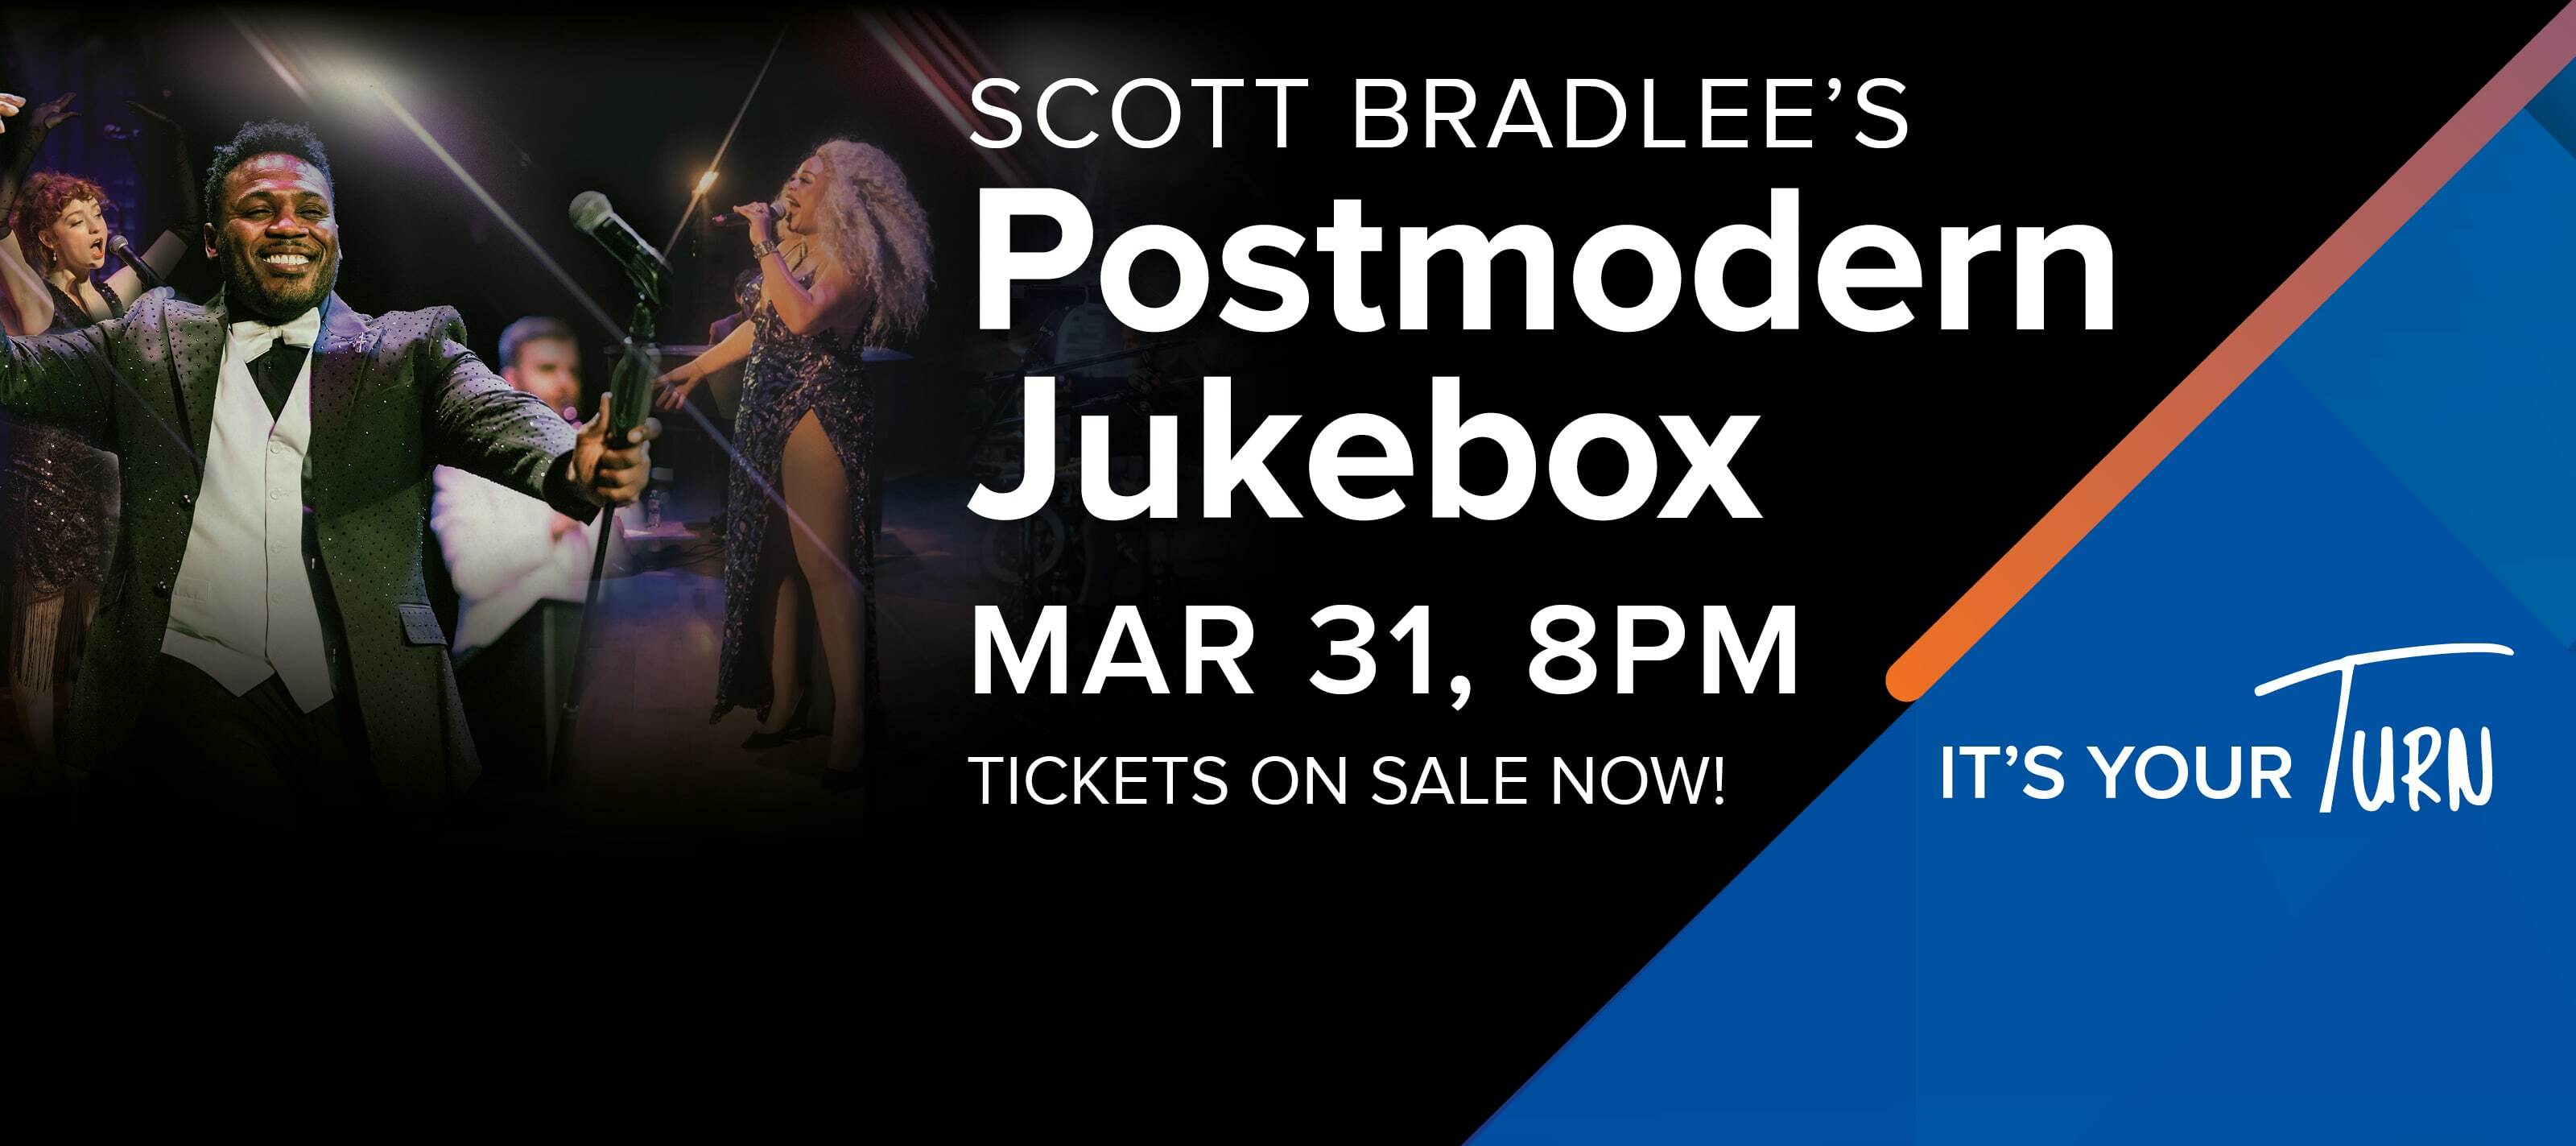 scott bradlees postmodern jukebox march 31 8pm tickets on sale now